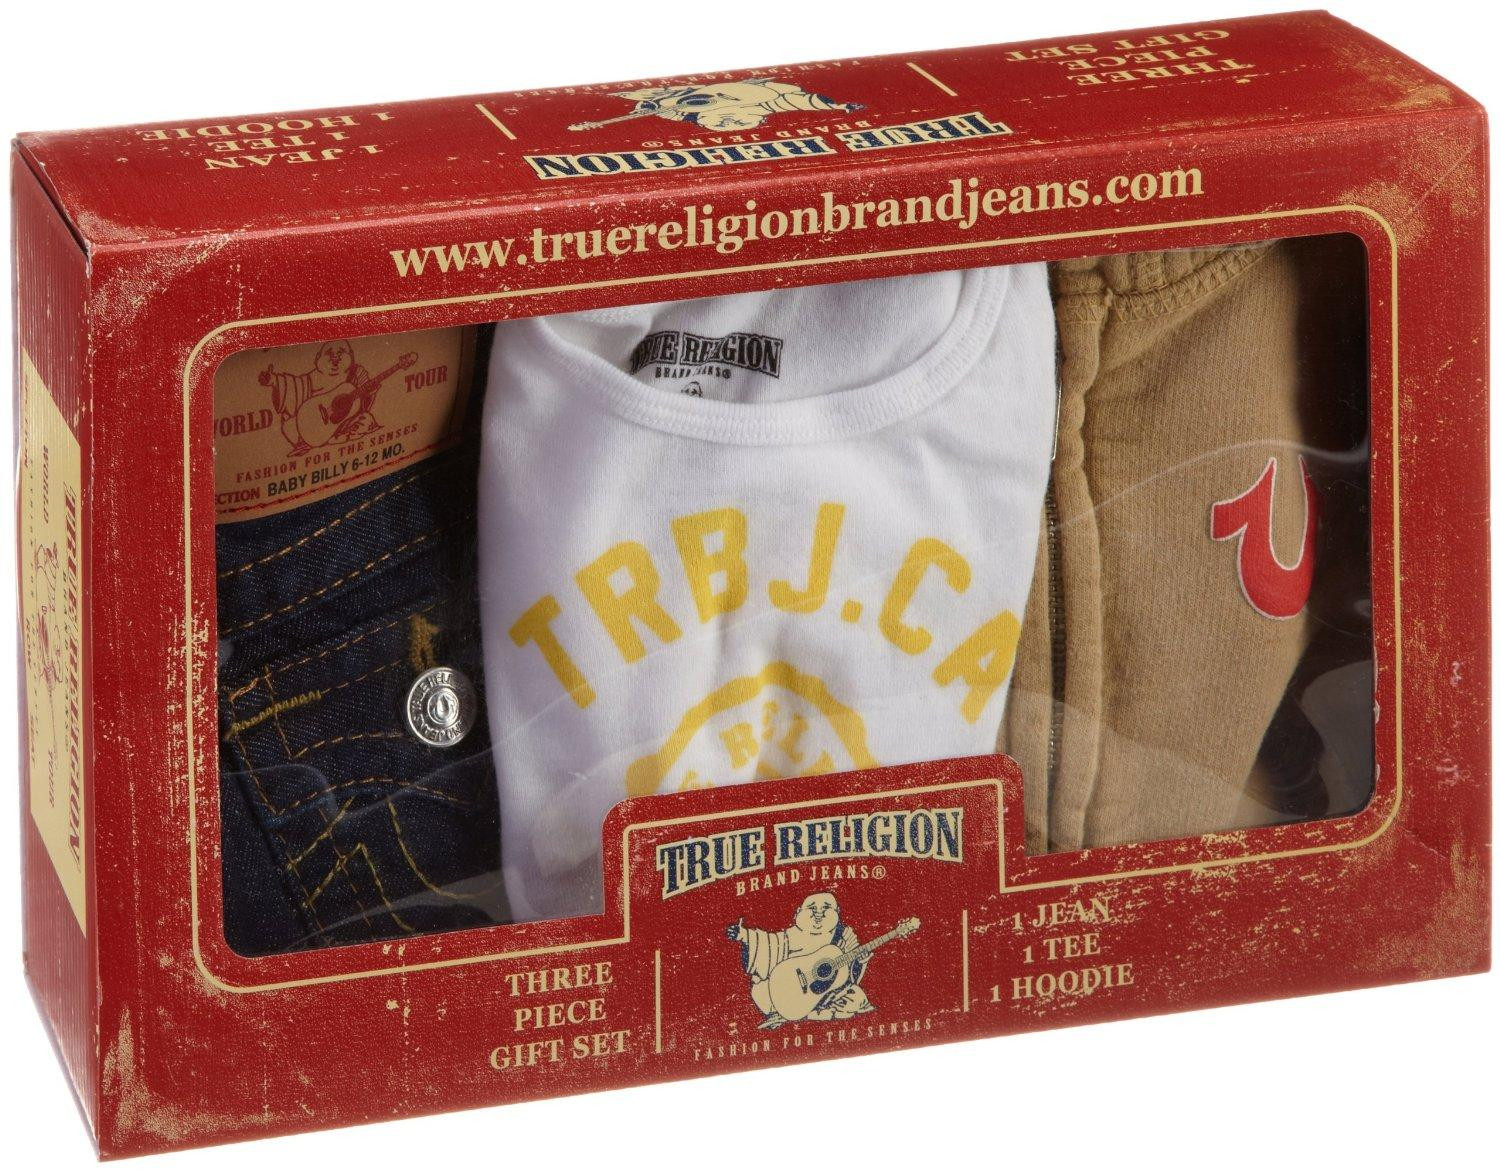 True Religion Baby 3 Piece Gift Box Set
 Discounted True Religion Uni Baby Infant Baby 3 Piece